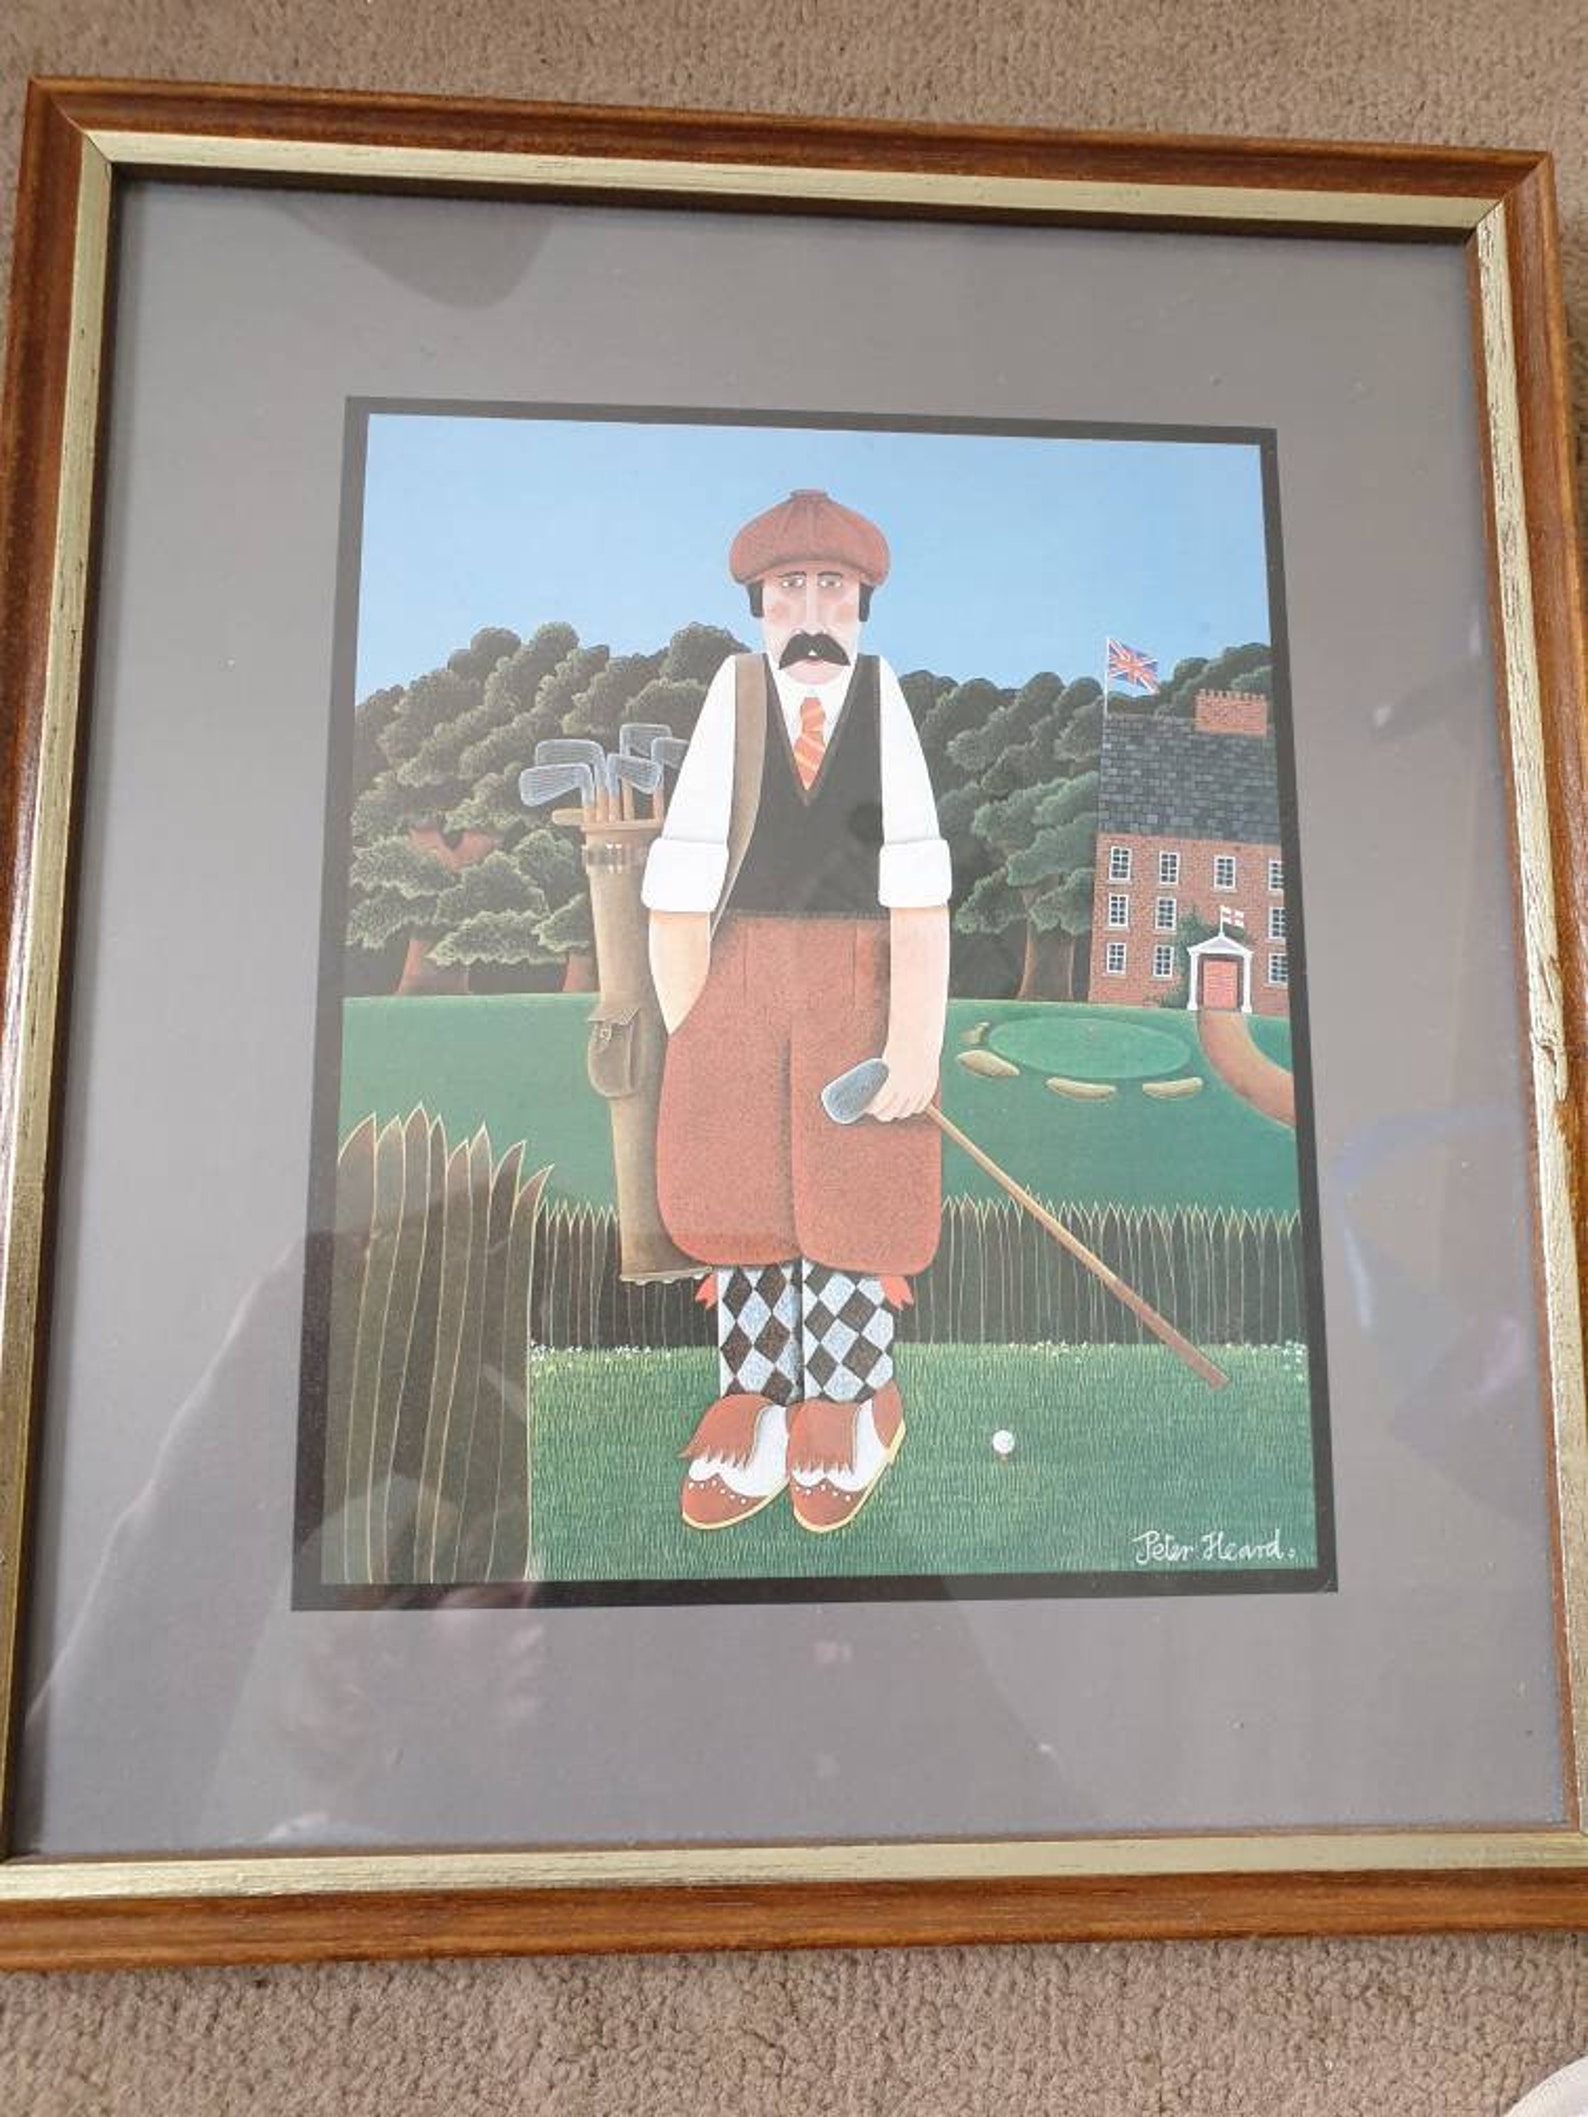 Peter Heard framed golf art print | Etsy